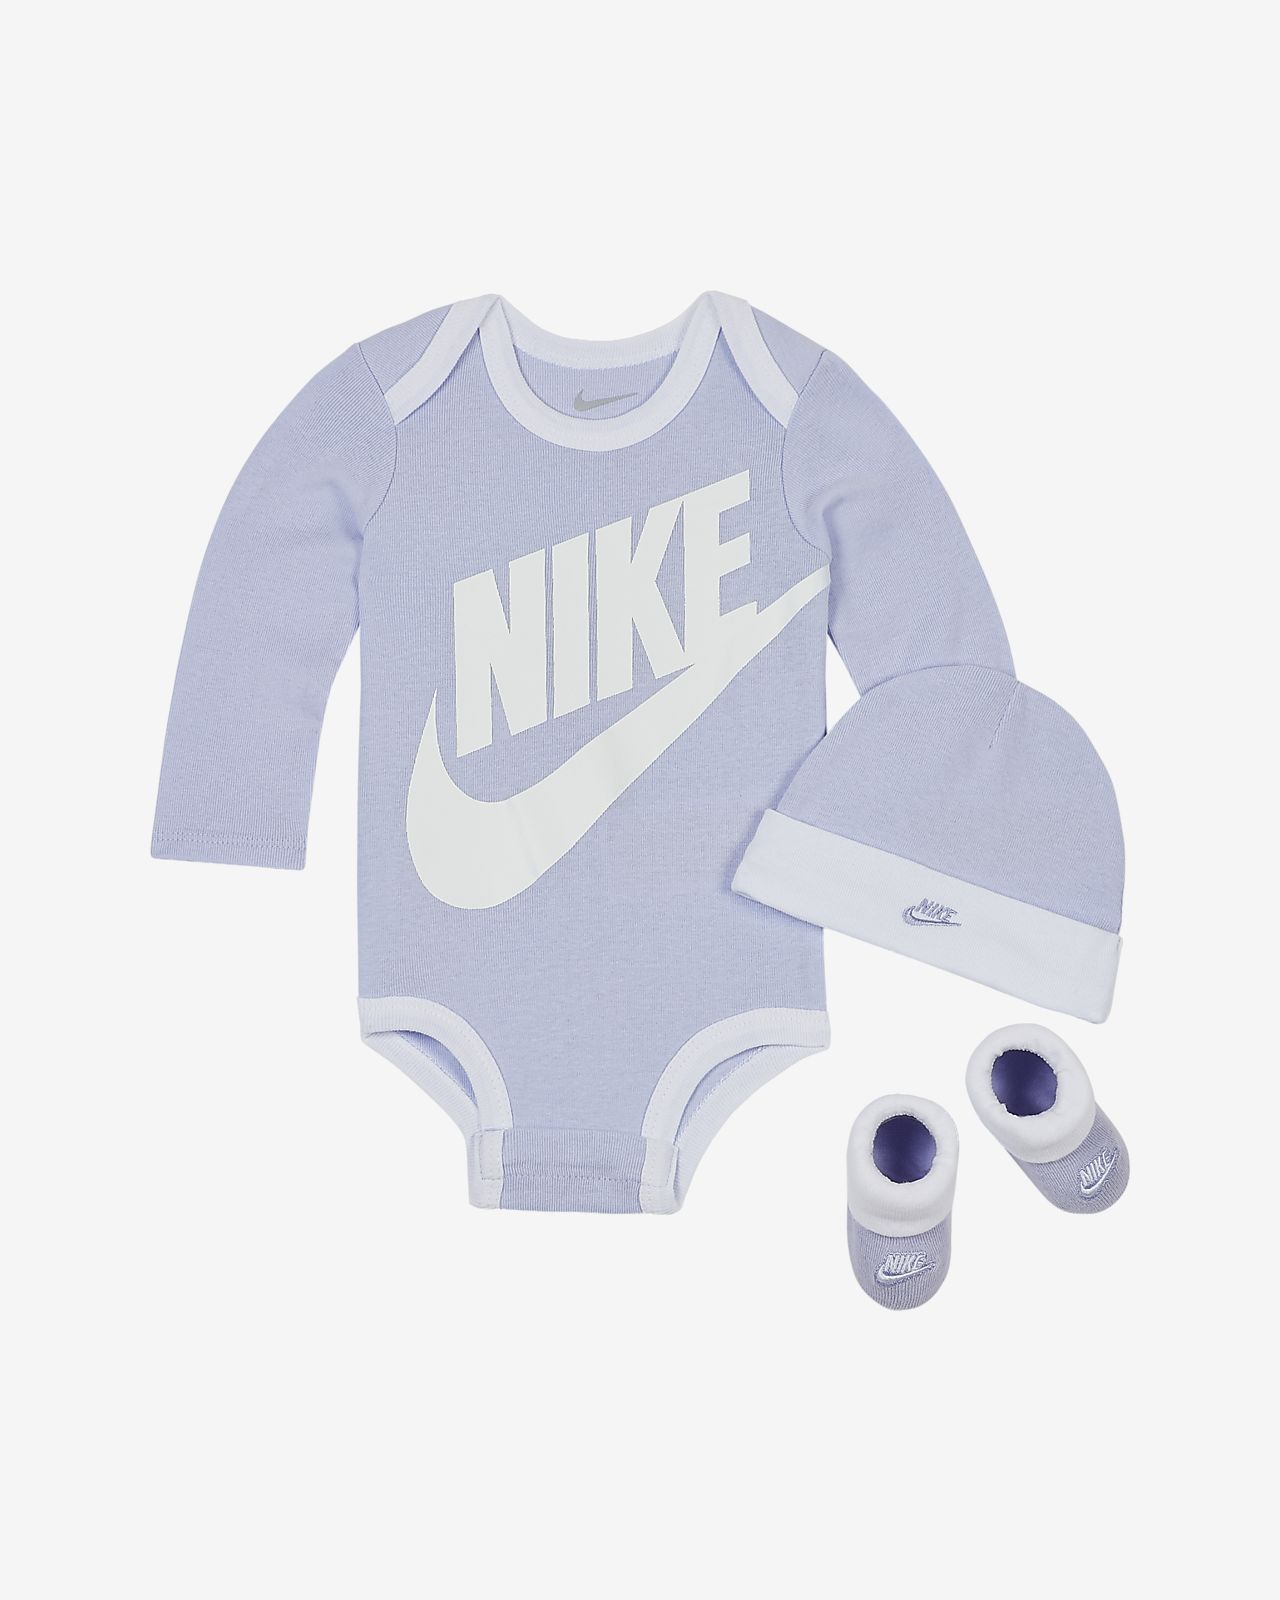 Nike Baby Bodysuit, Hat and Booties Set. Nike.com